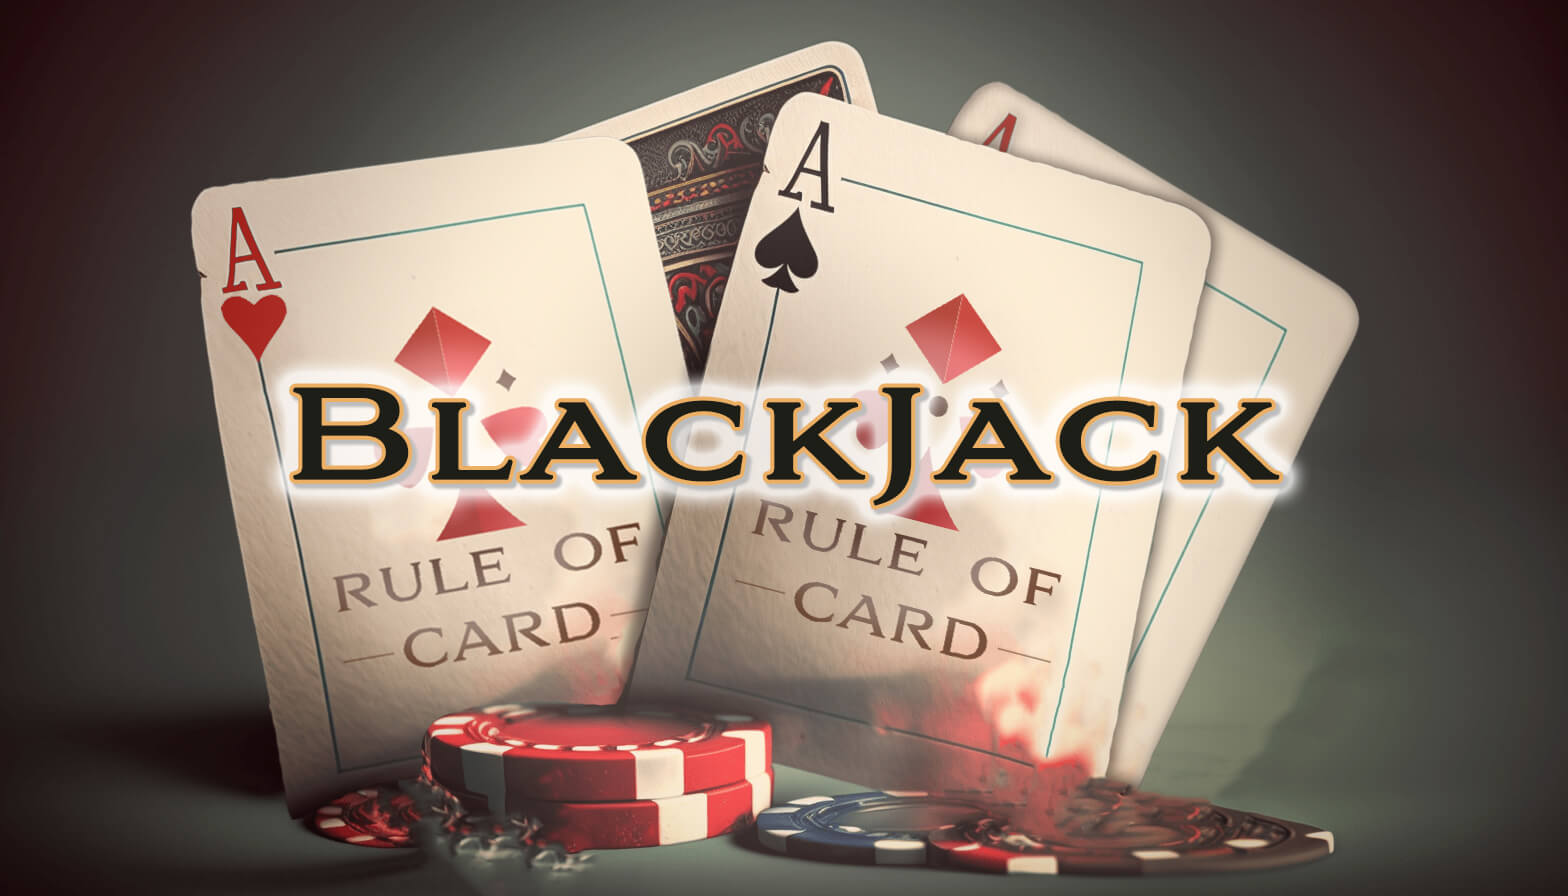 Playing the card game Blackjack